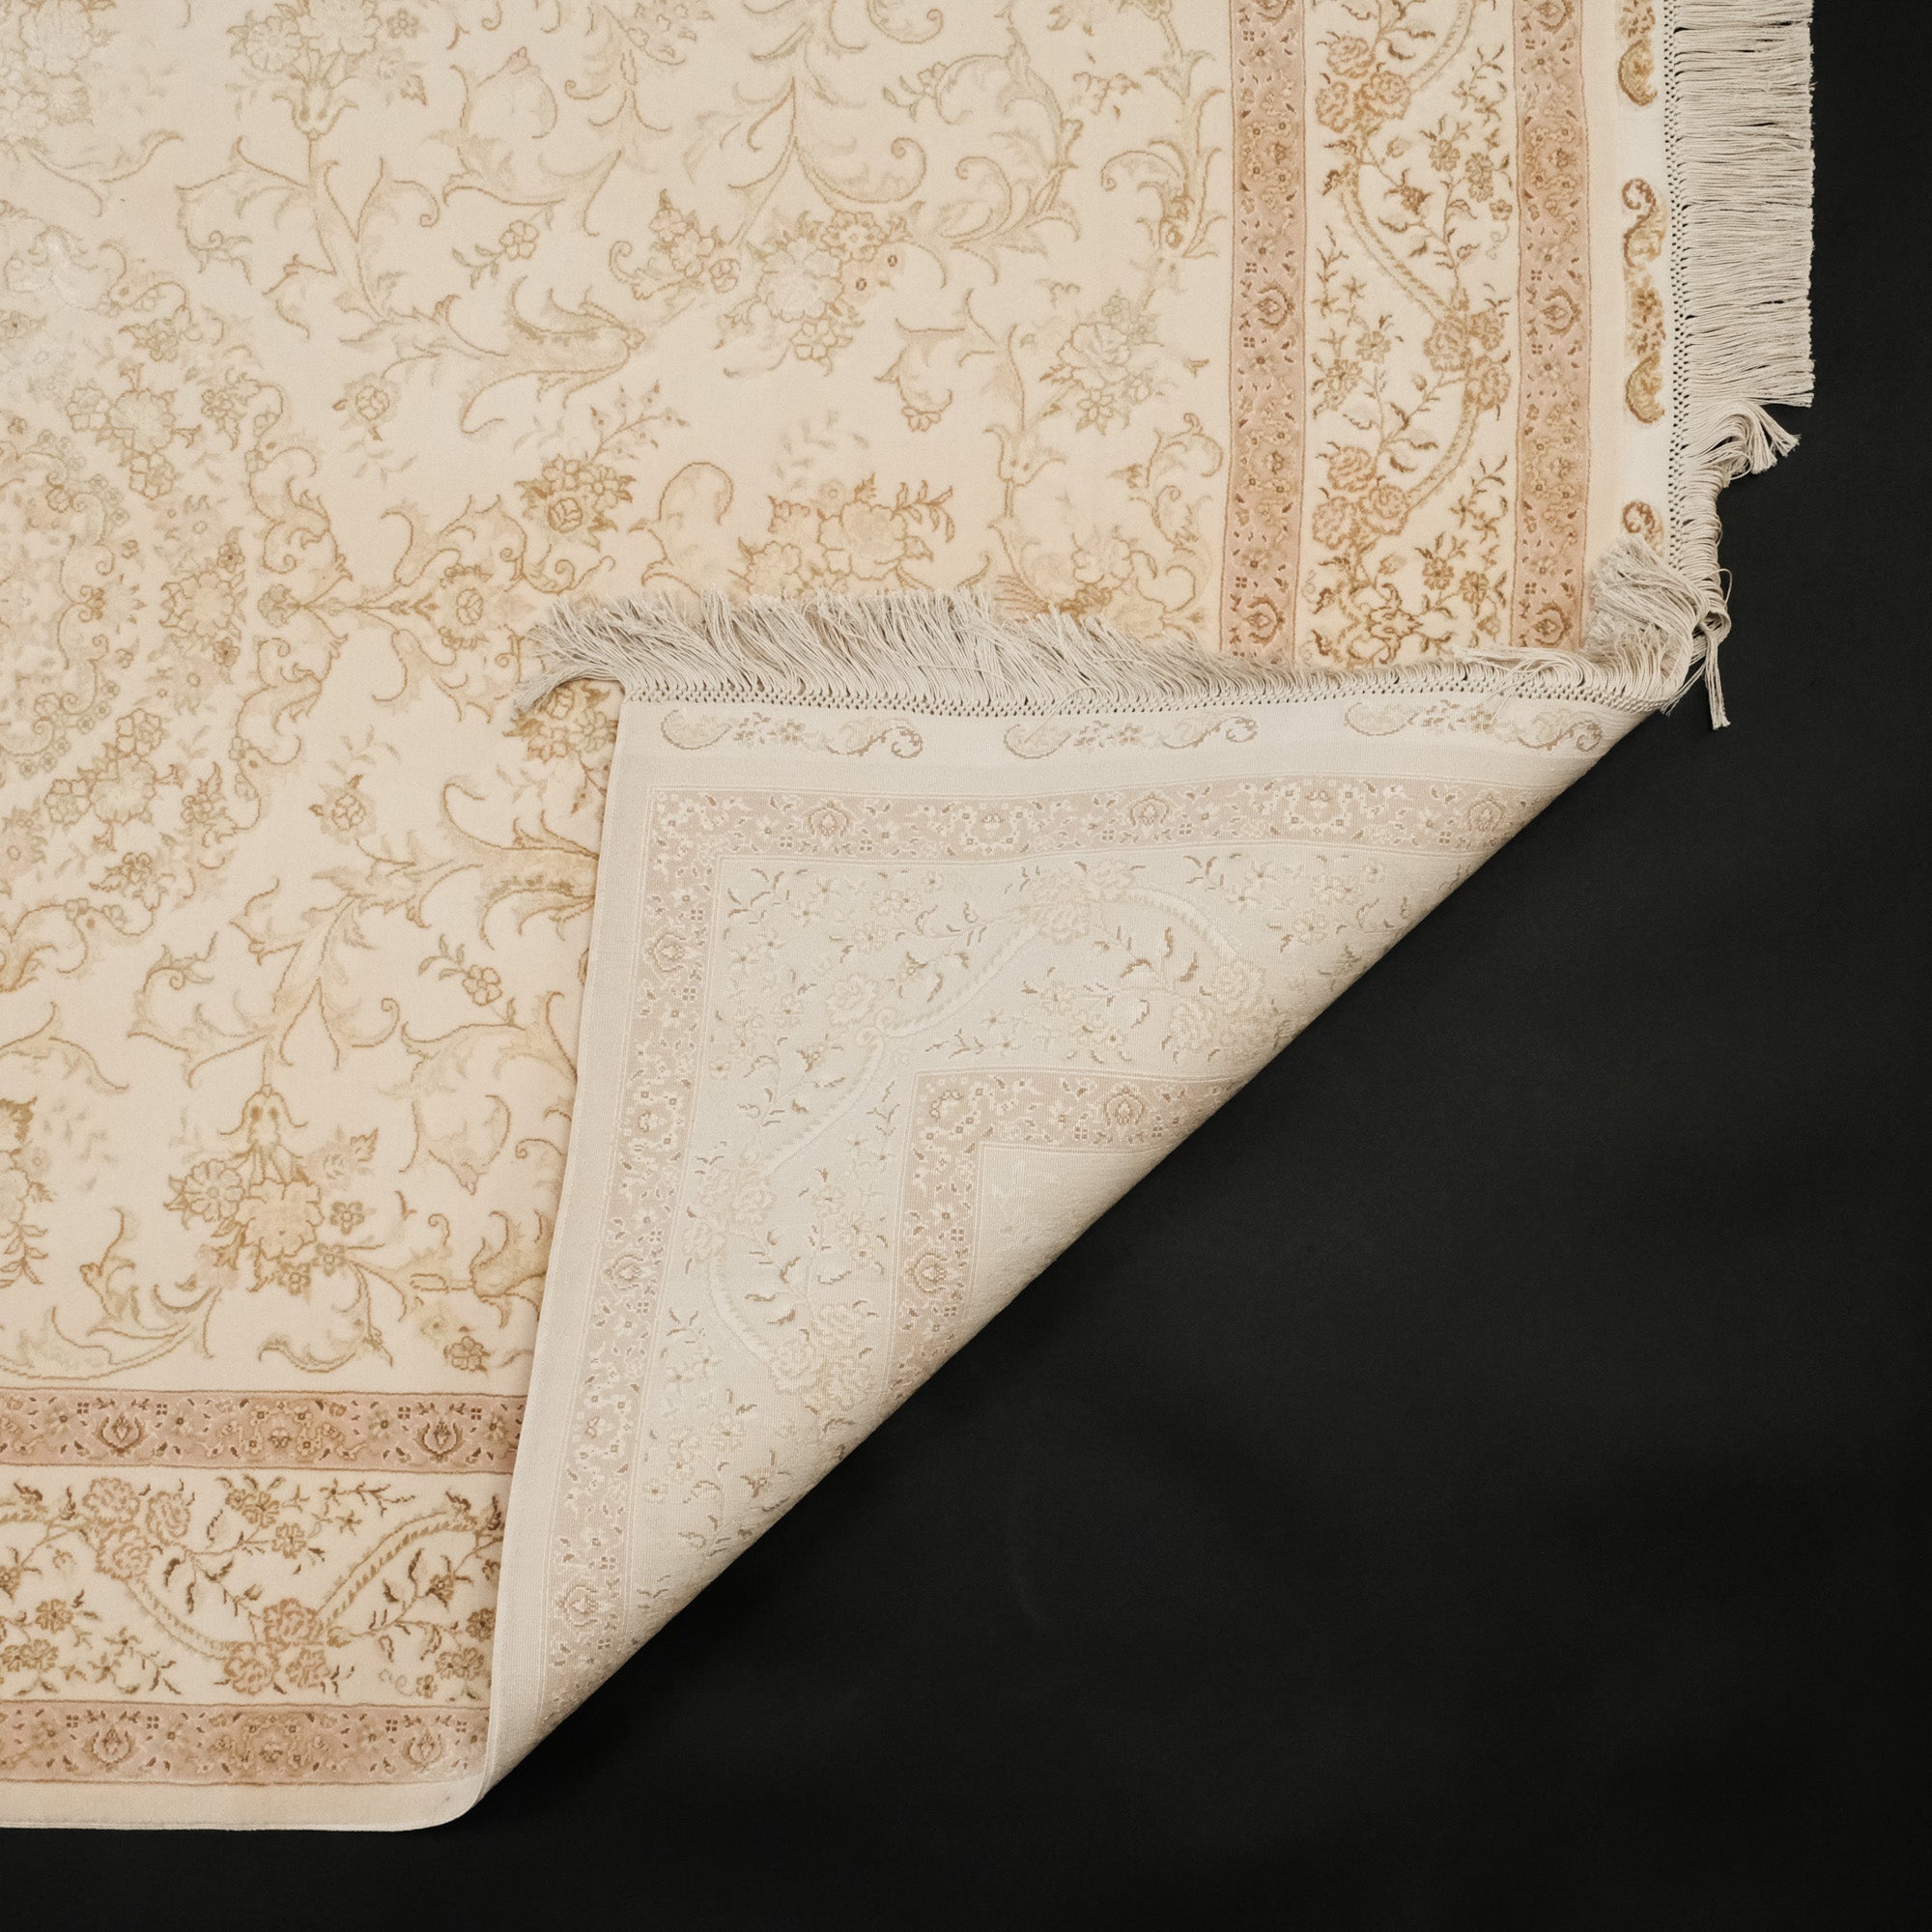 Zâde Series Hand Woven Silk Carpet